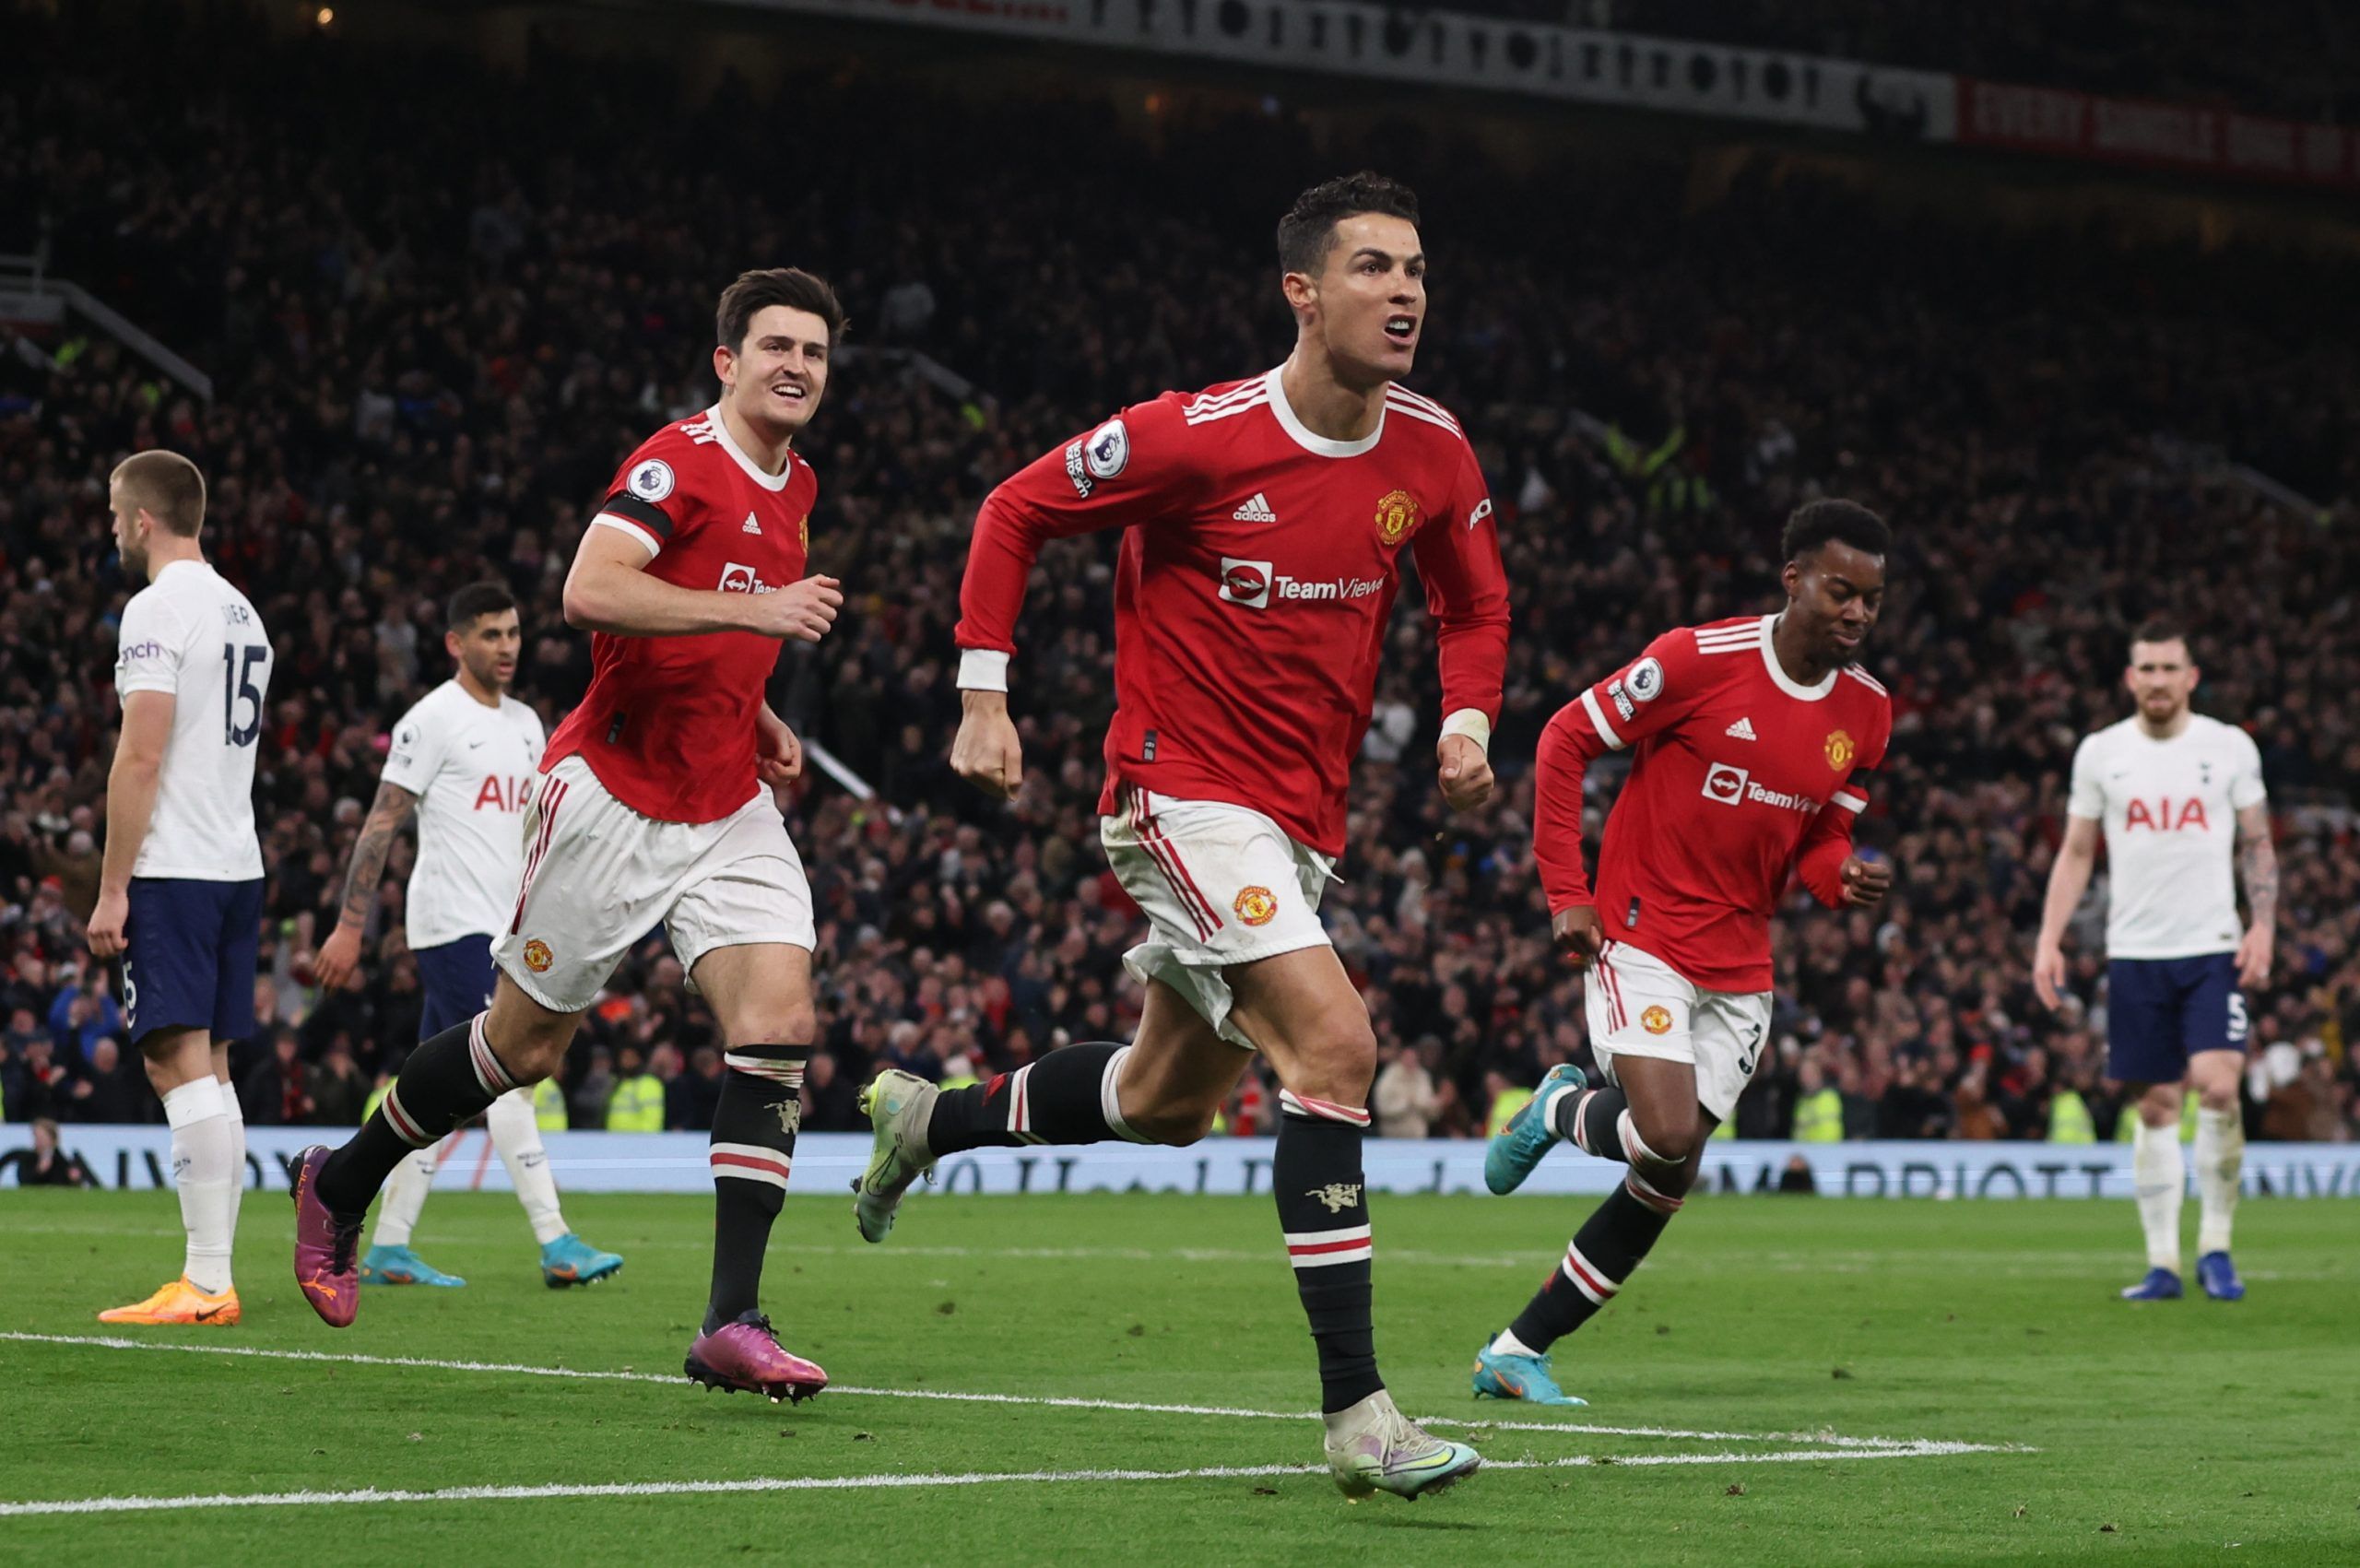 Manchester United's Cristiano Ronaldo celebrates scoring their third goal vs Tottenham Hotspur